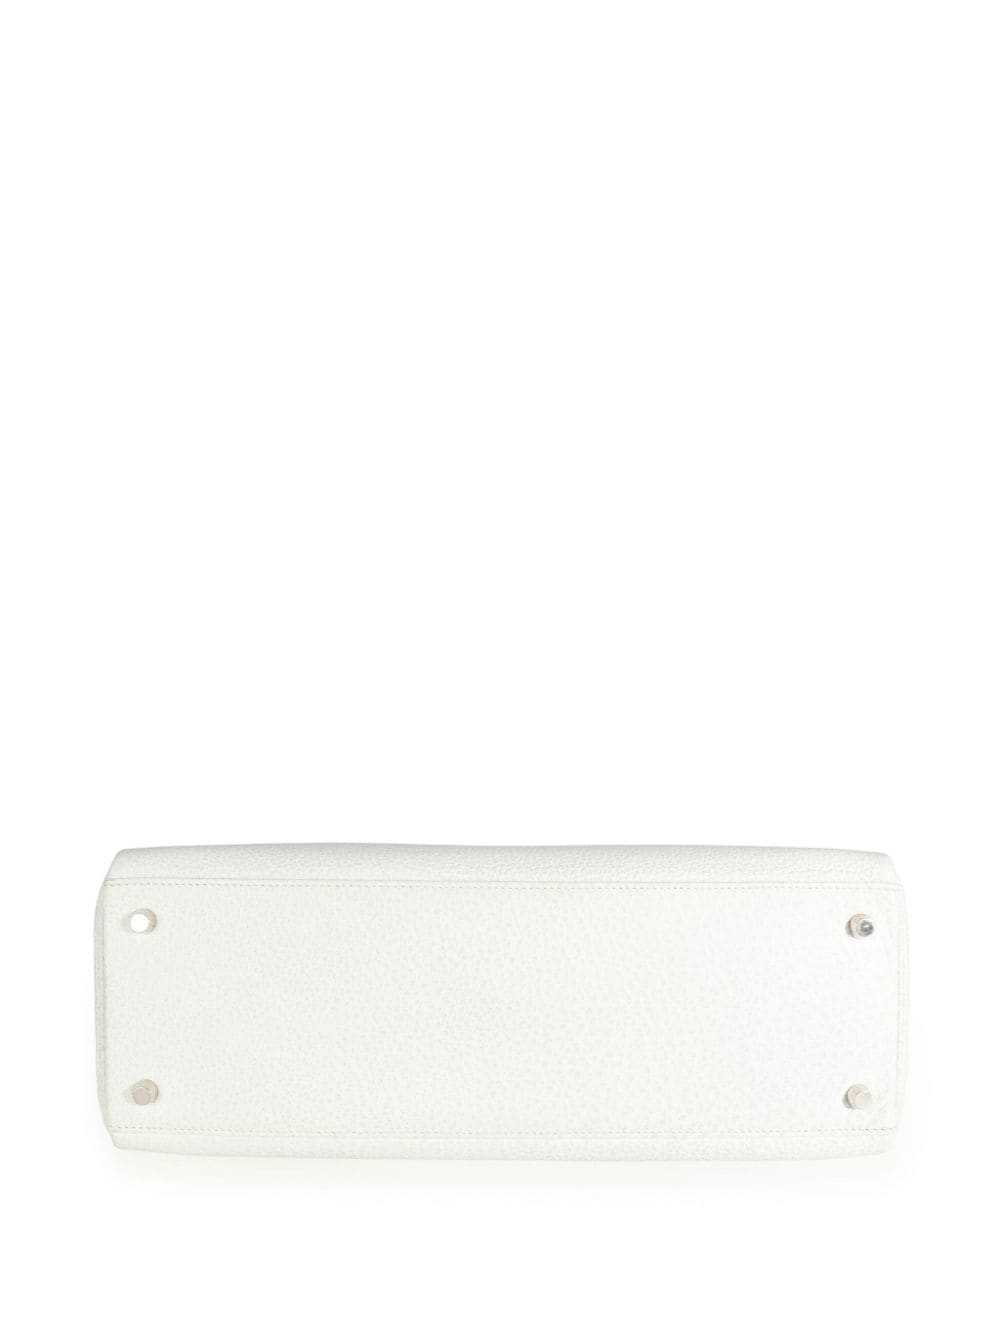 Hermès Pre-Owned Retourné Kelly 35 handbag - White - image 3